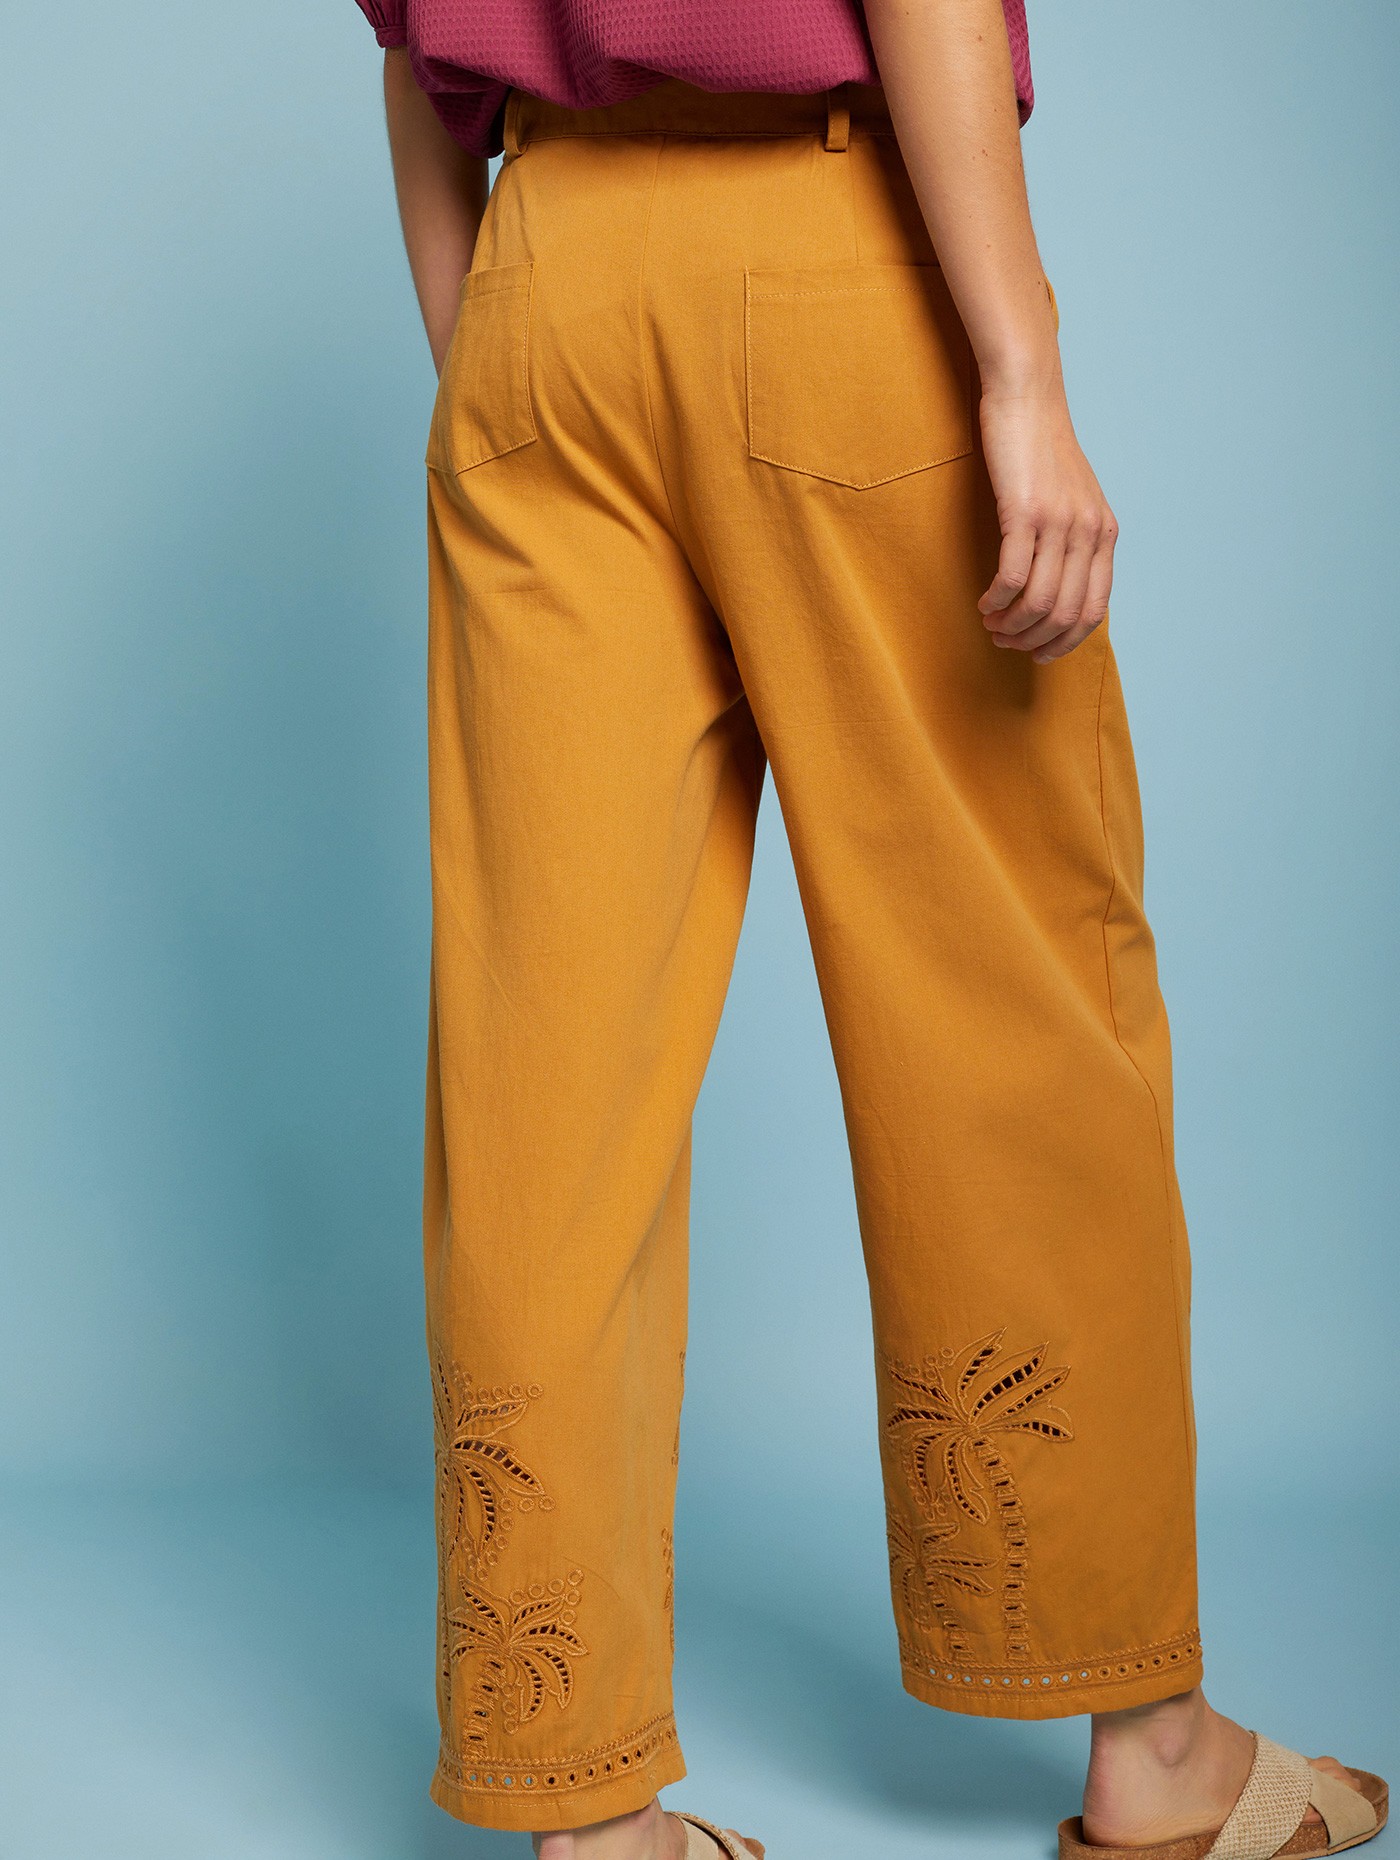 Palm tree embroidery pants 2